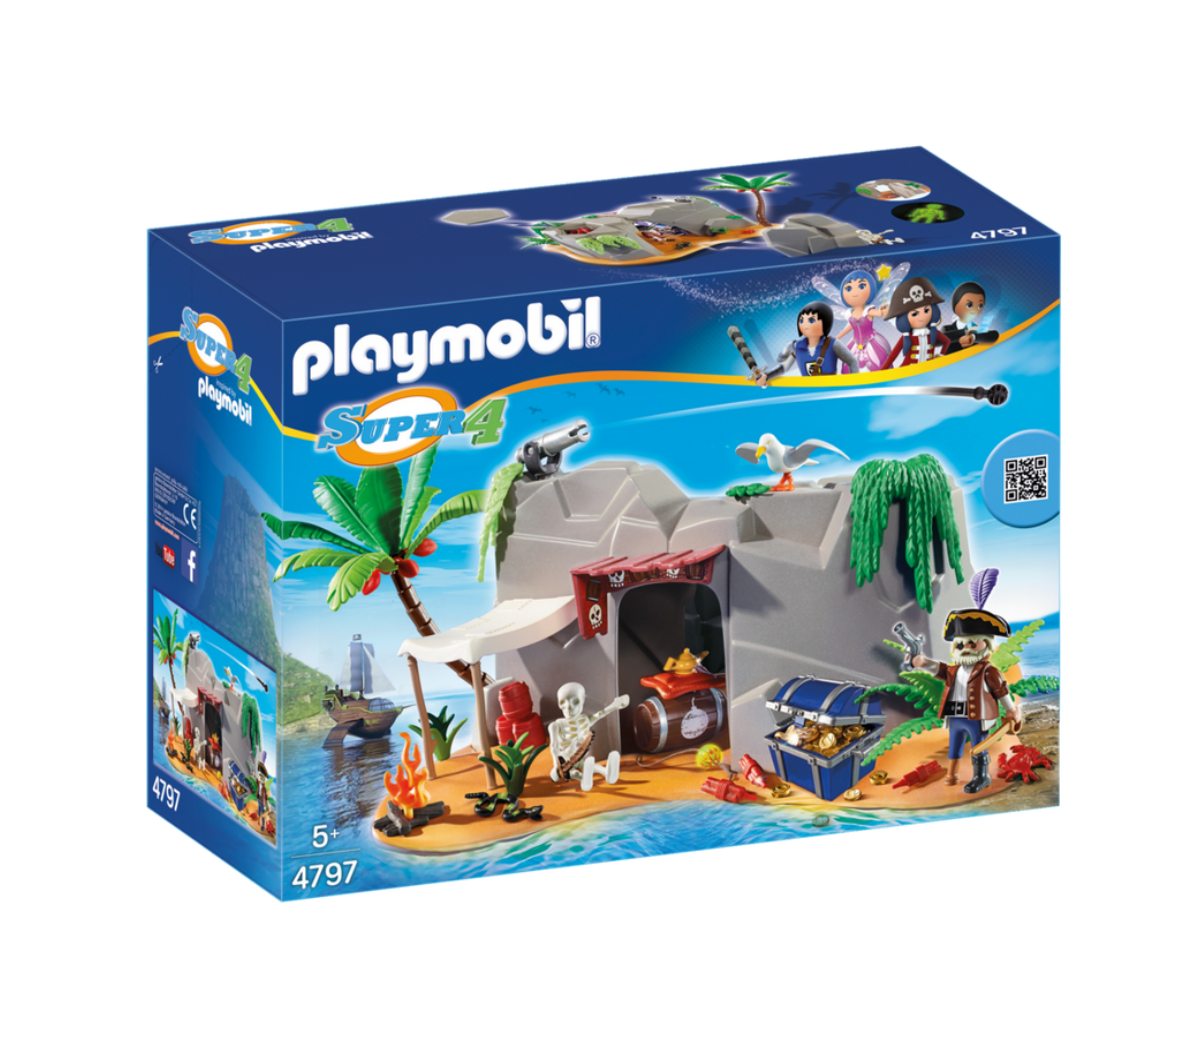 Playmobil 4797 Super4 Cueva Pirata Playset